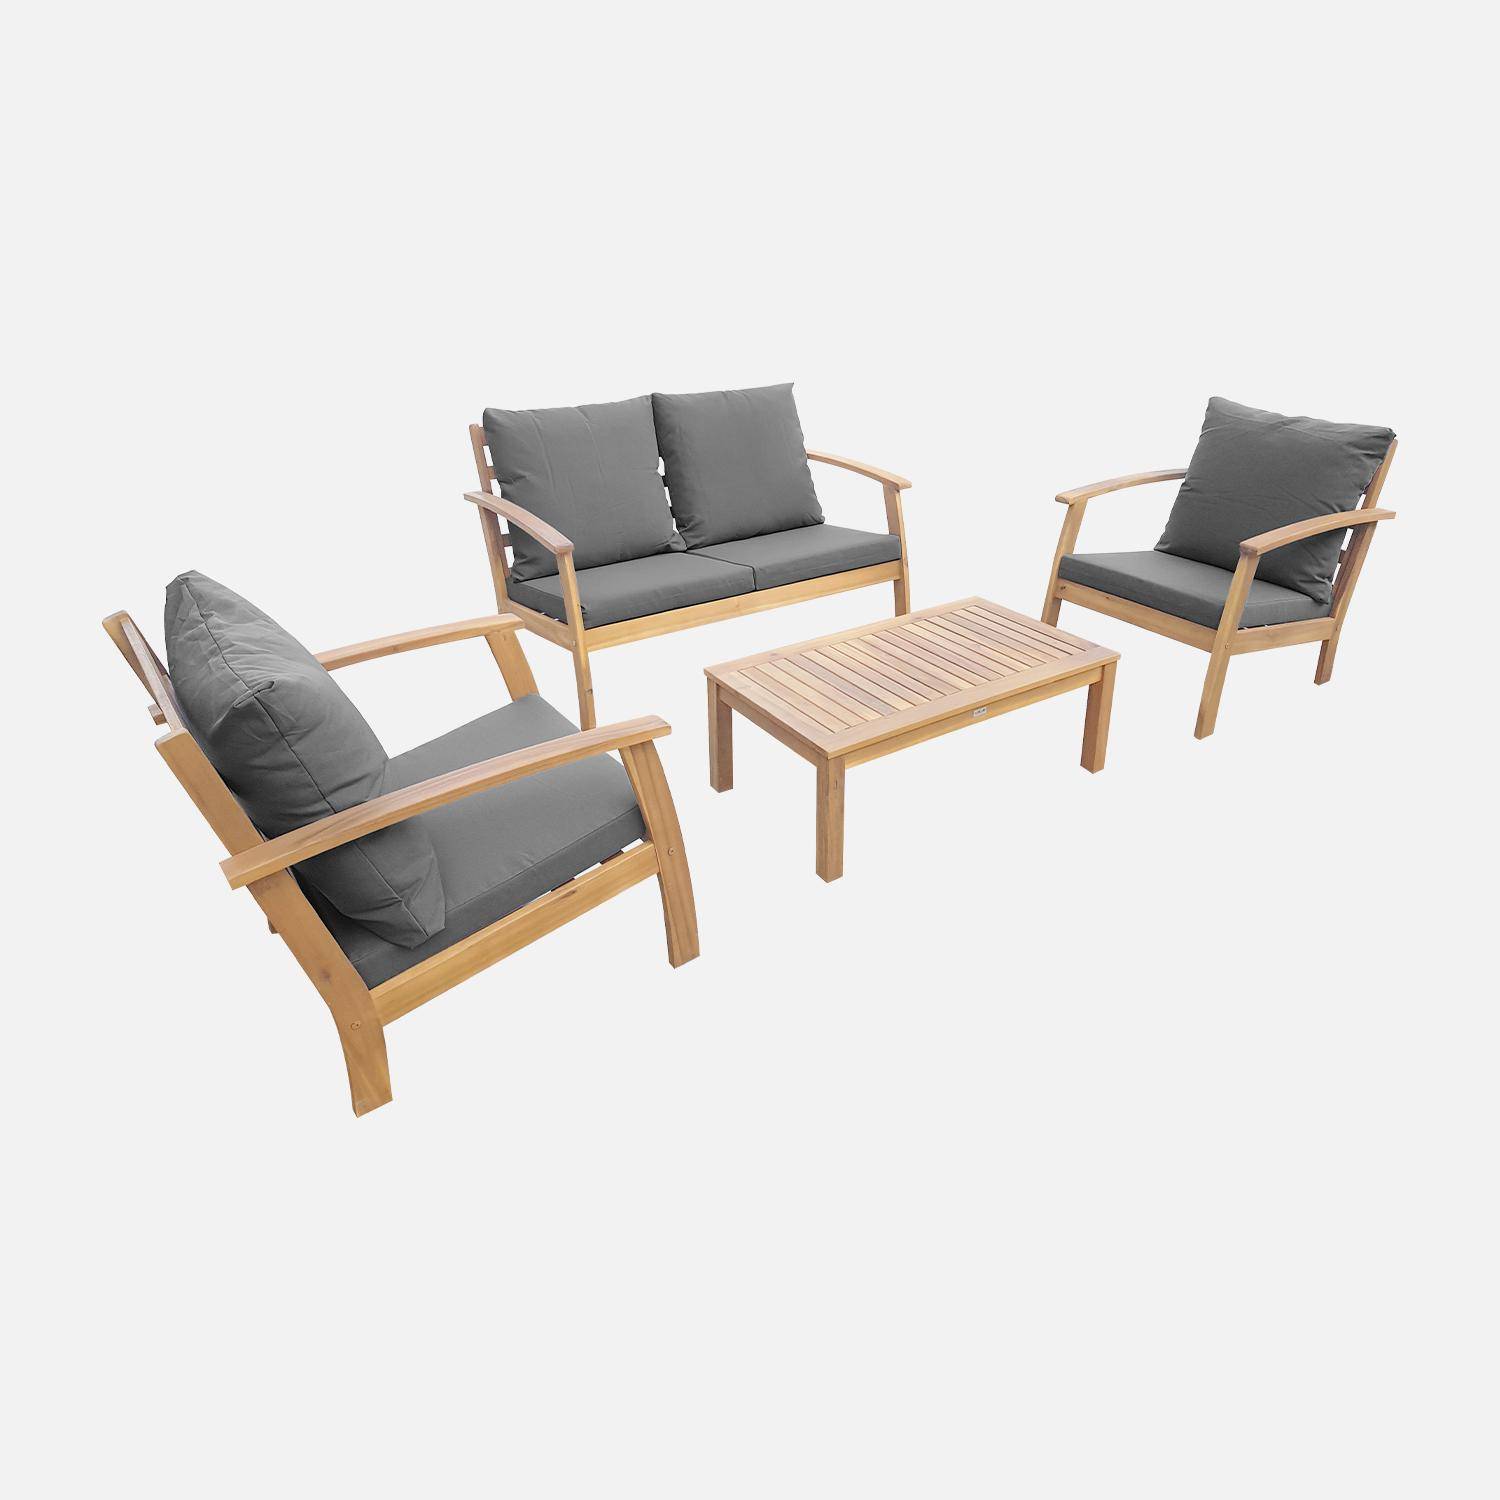 4-seater wooden garden sofa - Acacia wood sofa, armchairs and coffee table, designer piece  - Ushuaia - Grey Photo2